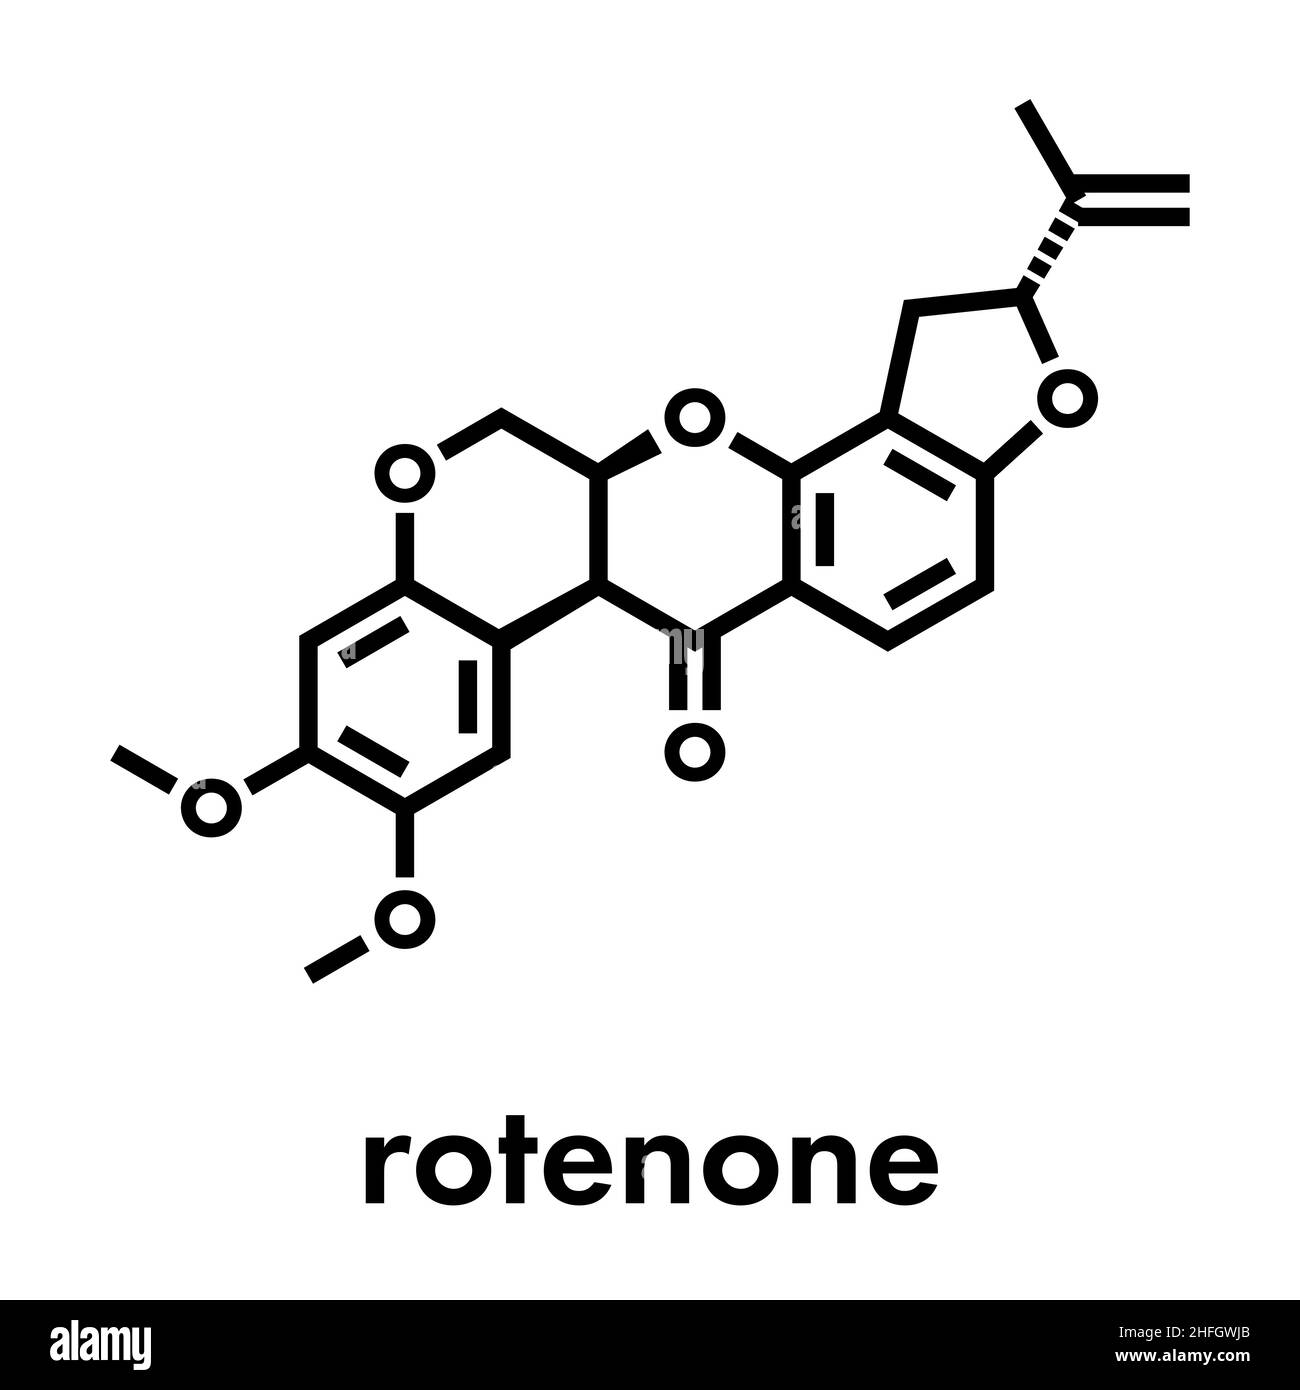 Rotenone broad-spectrum insecticide molecule. Also linked to development of Parkinson’s disease. Skeletal formula. Stock Vector